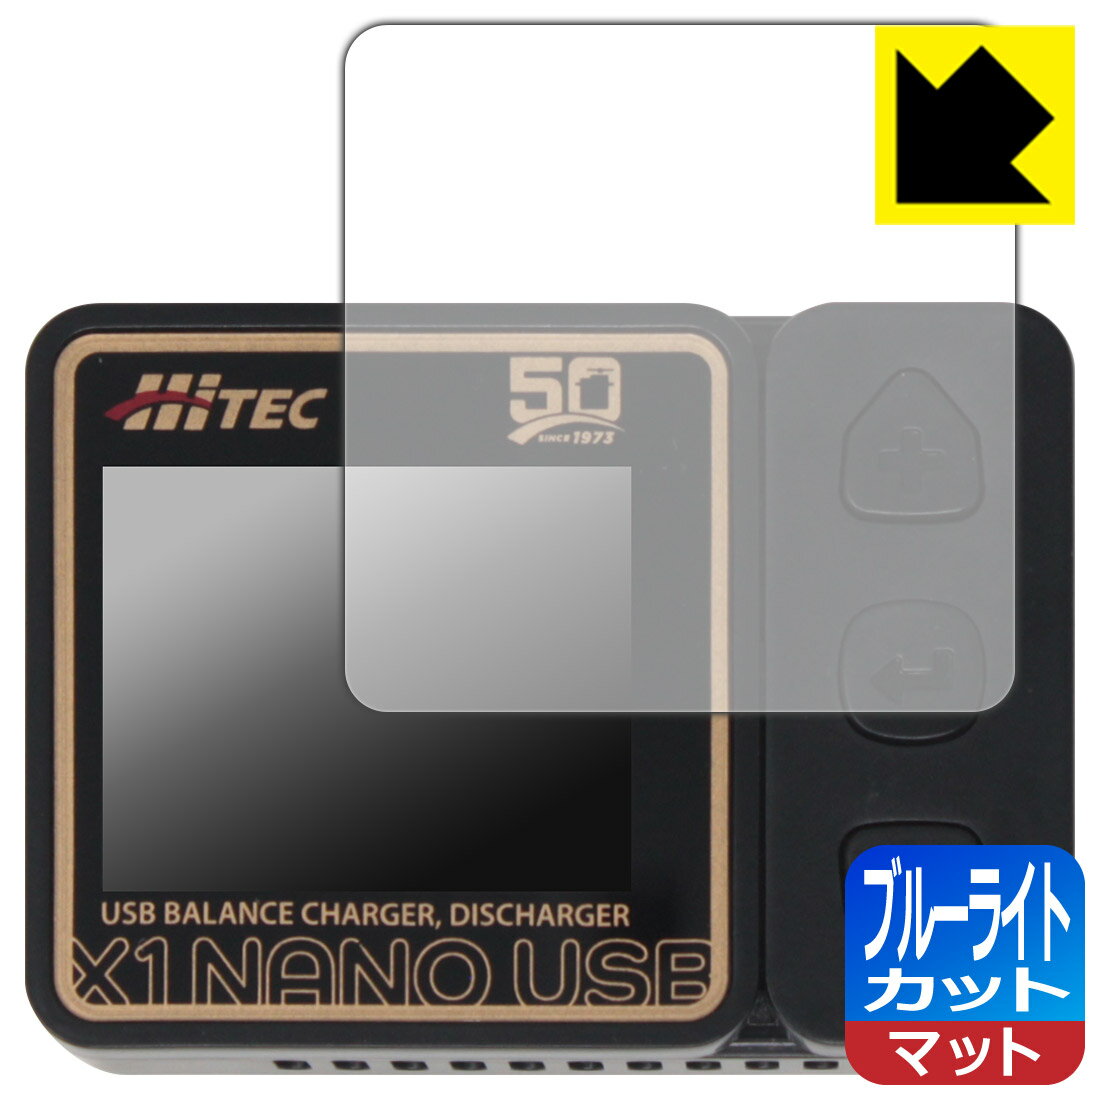 HiTEC X1 NANO USB 用 ブルーライトカット【反射低減】保護フィルム 日本製 自社製造直販